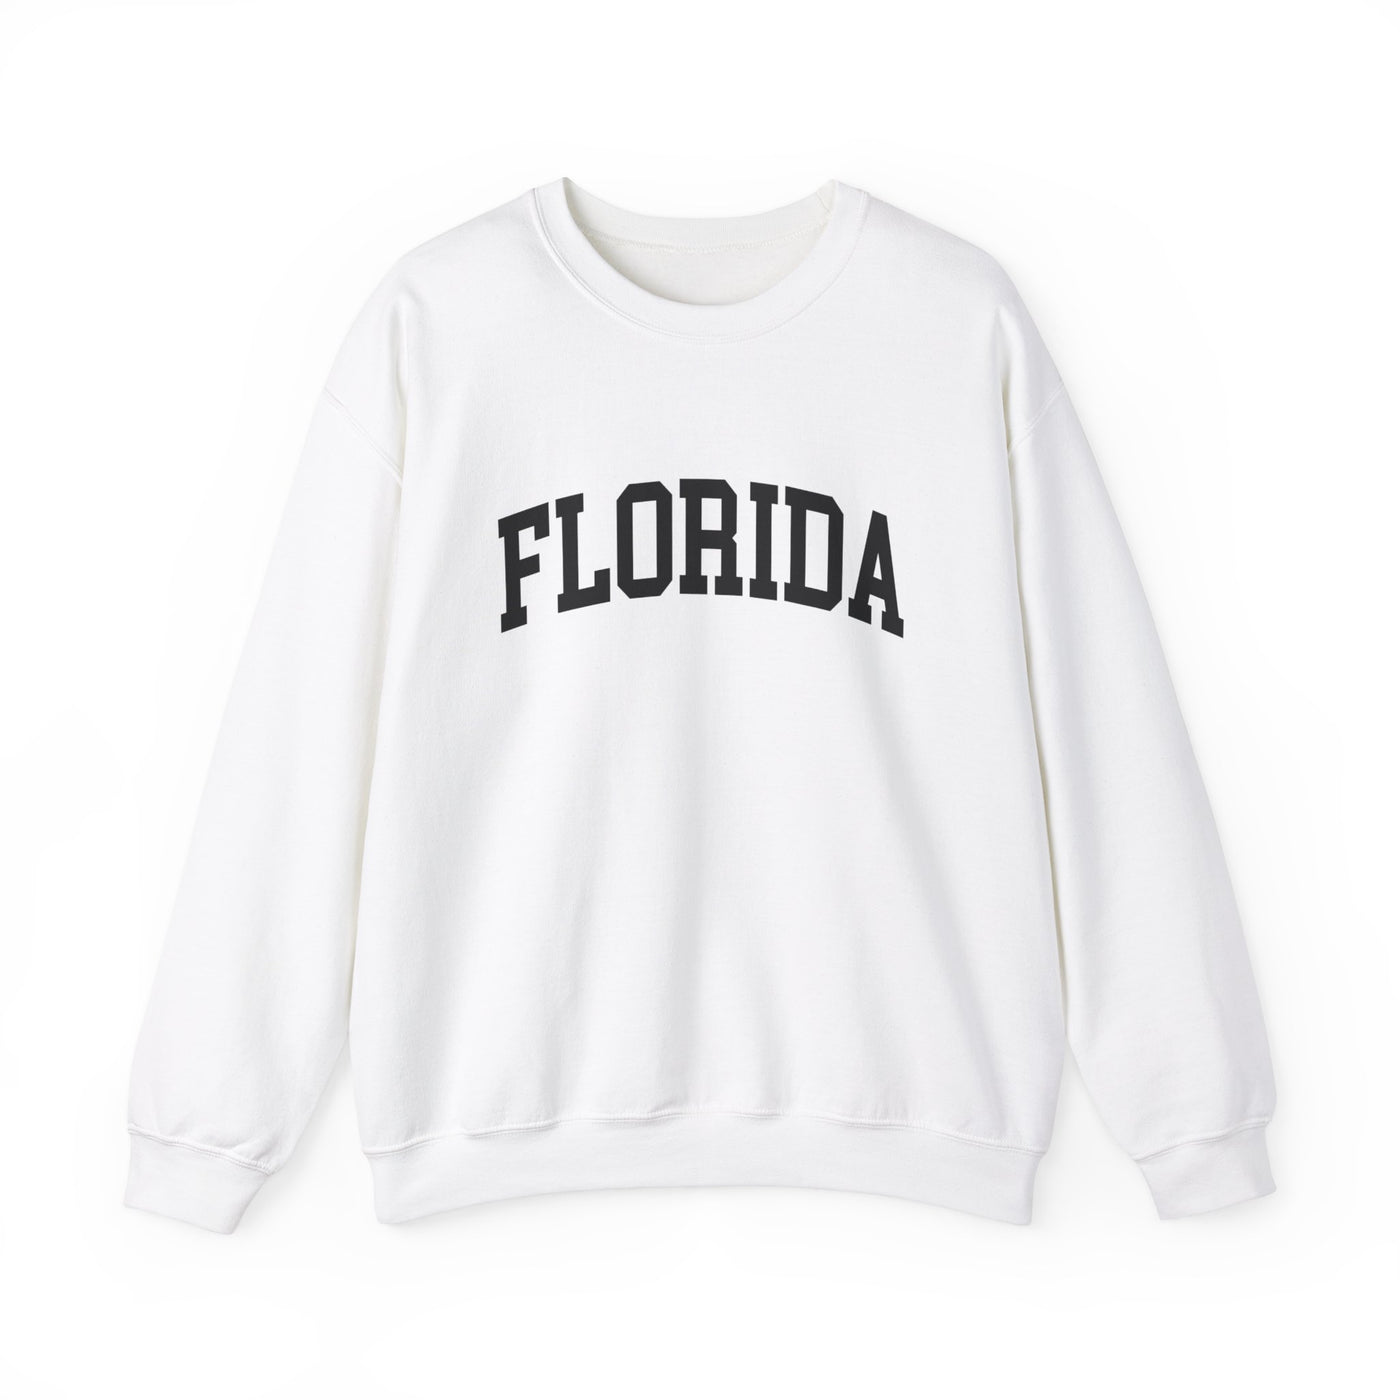 Florida Collegiate Crewneck Sweatshirt